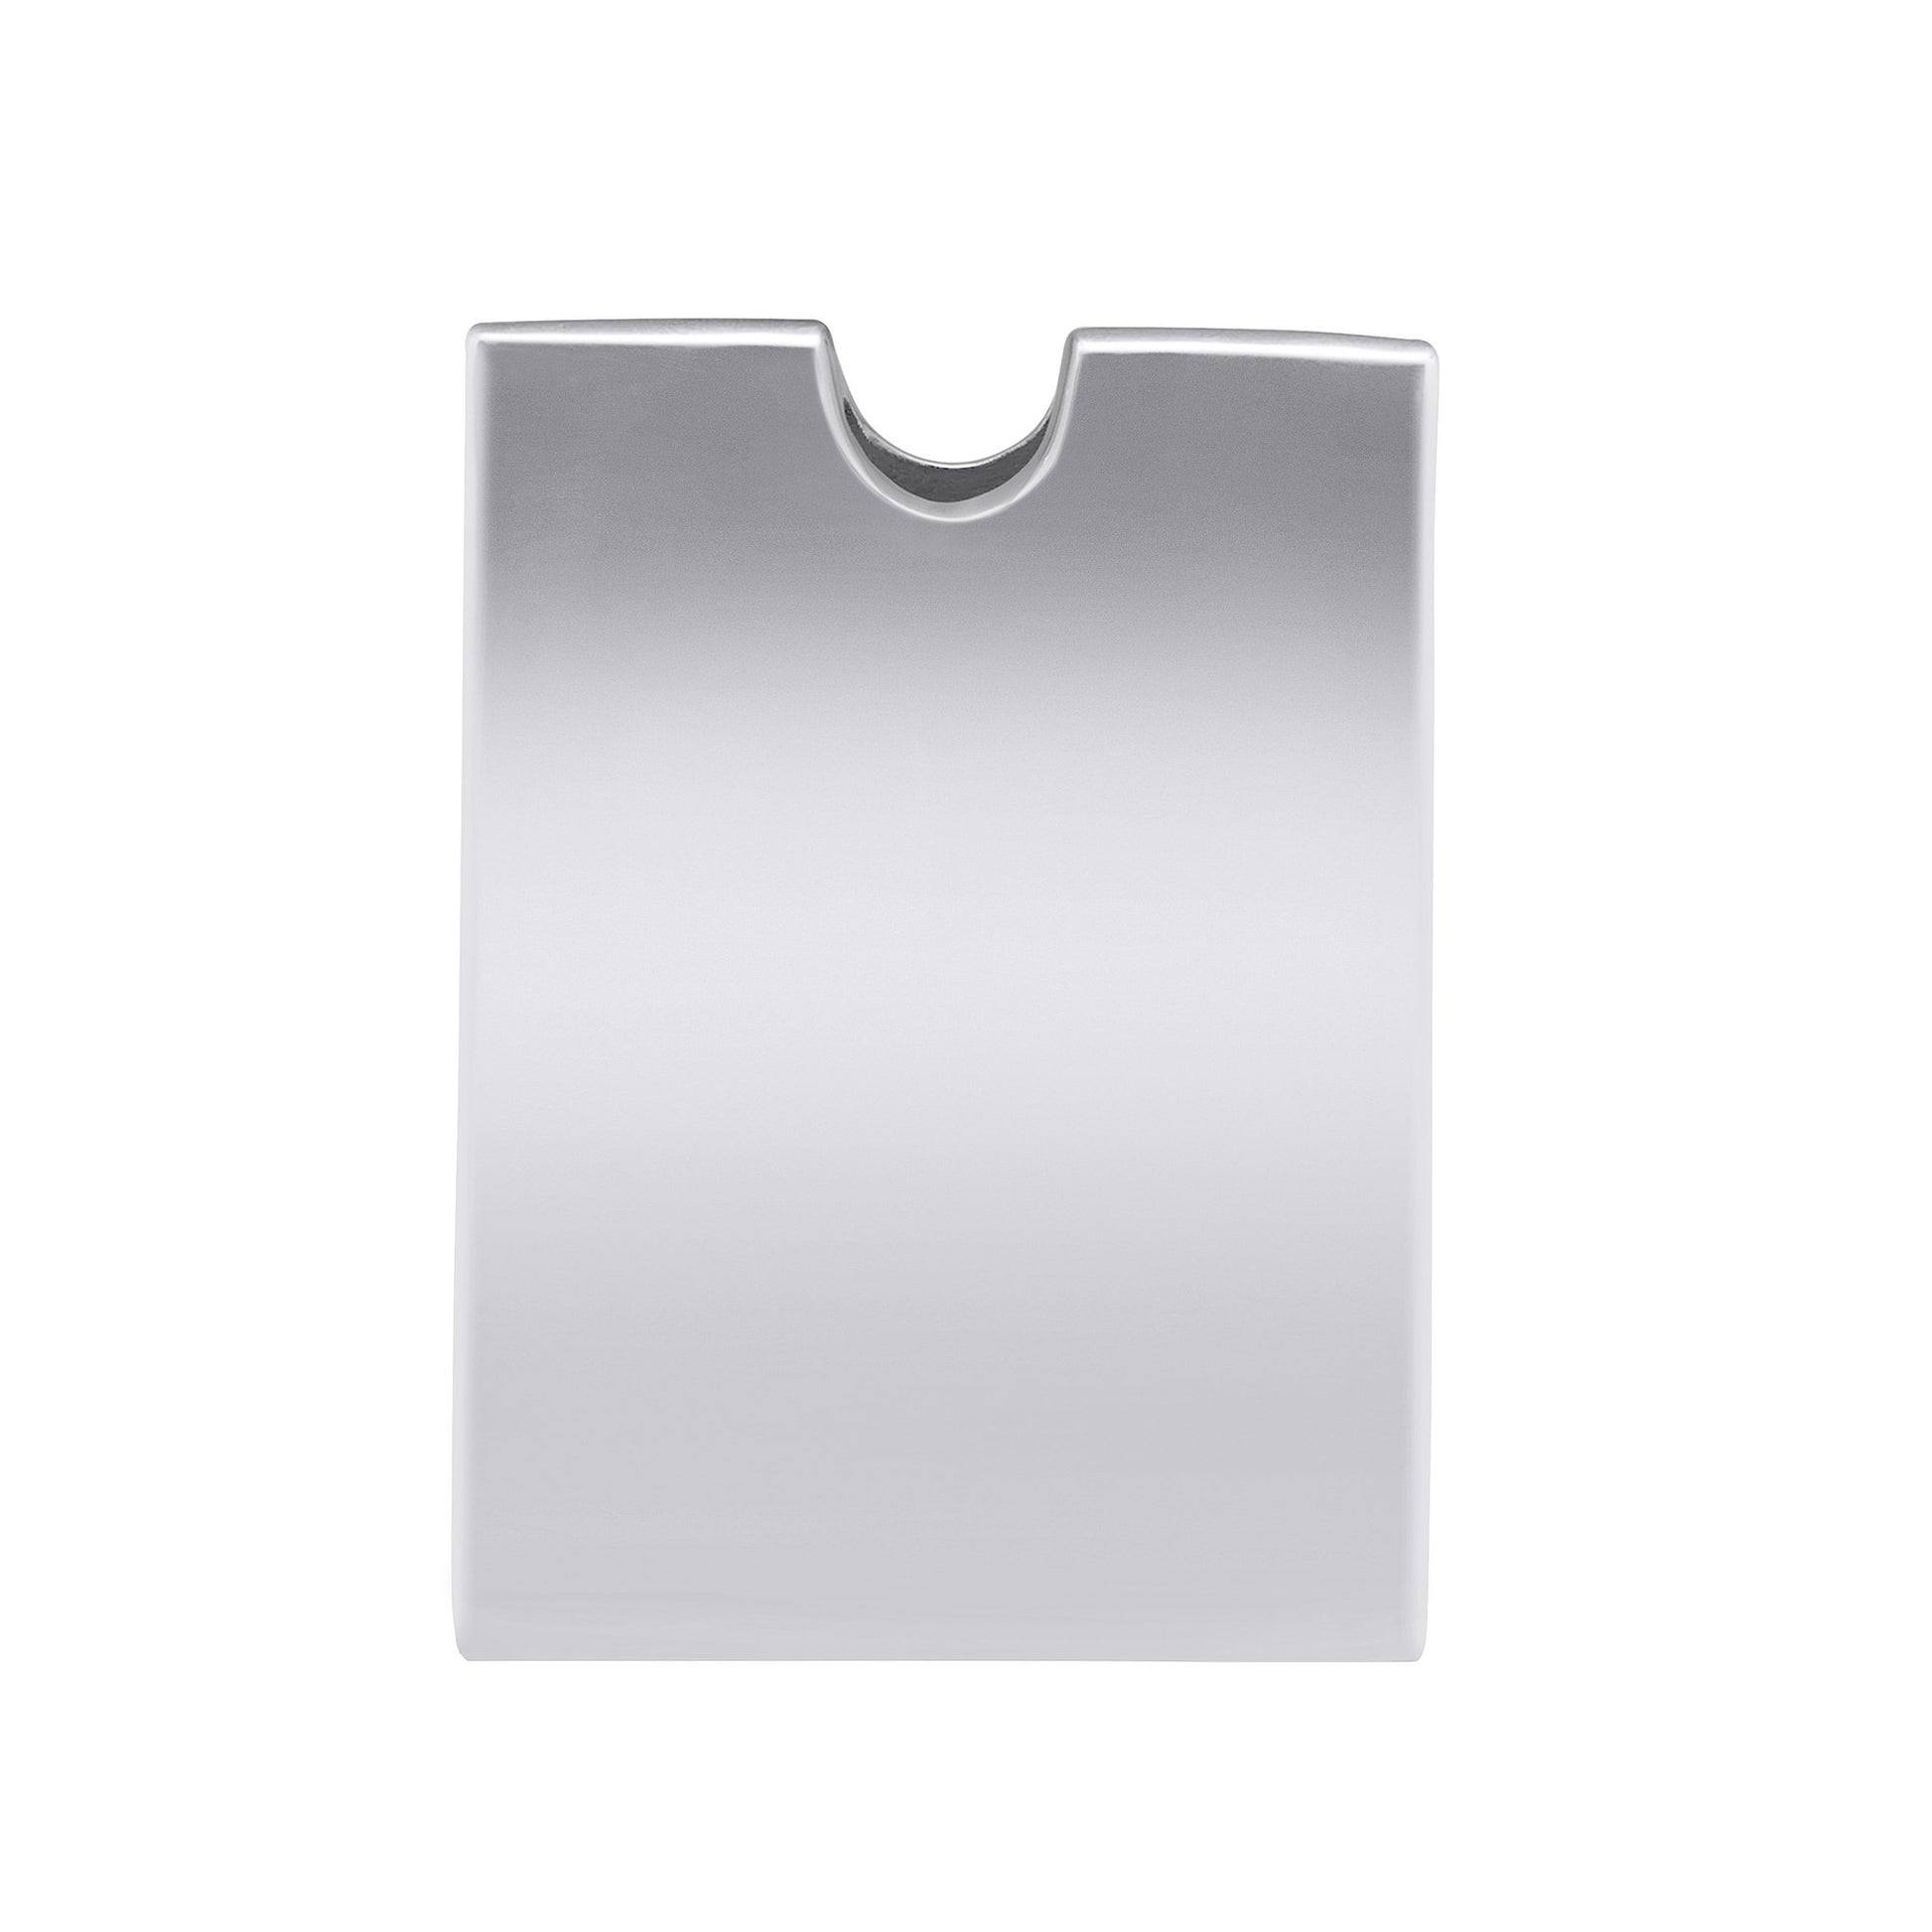 Silver iPad Tablet Holder (back)